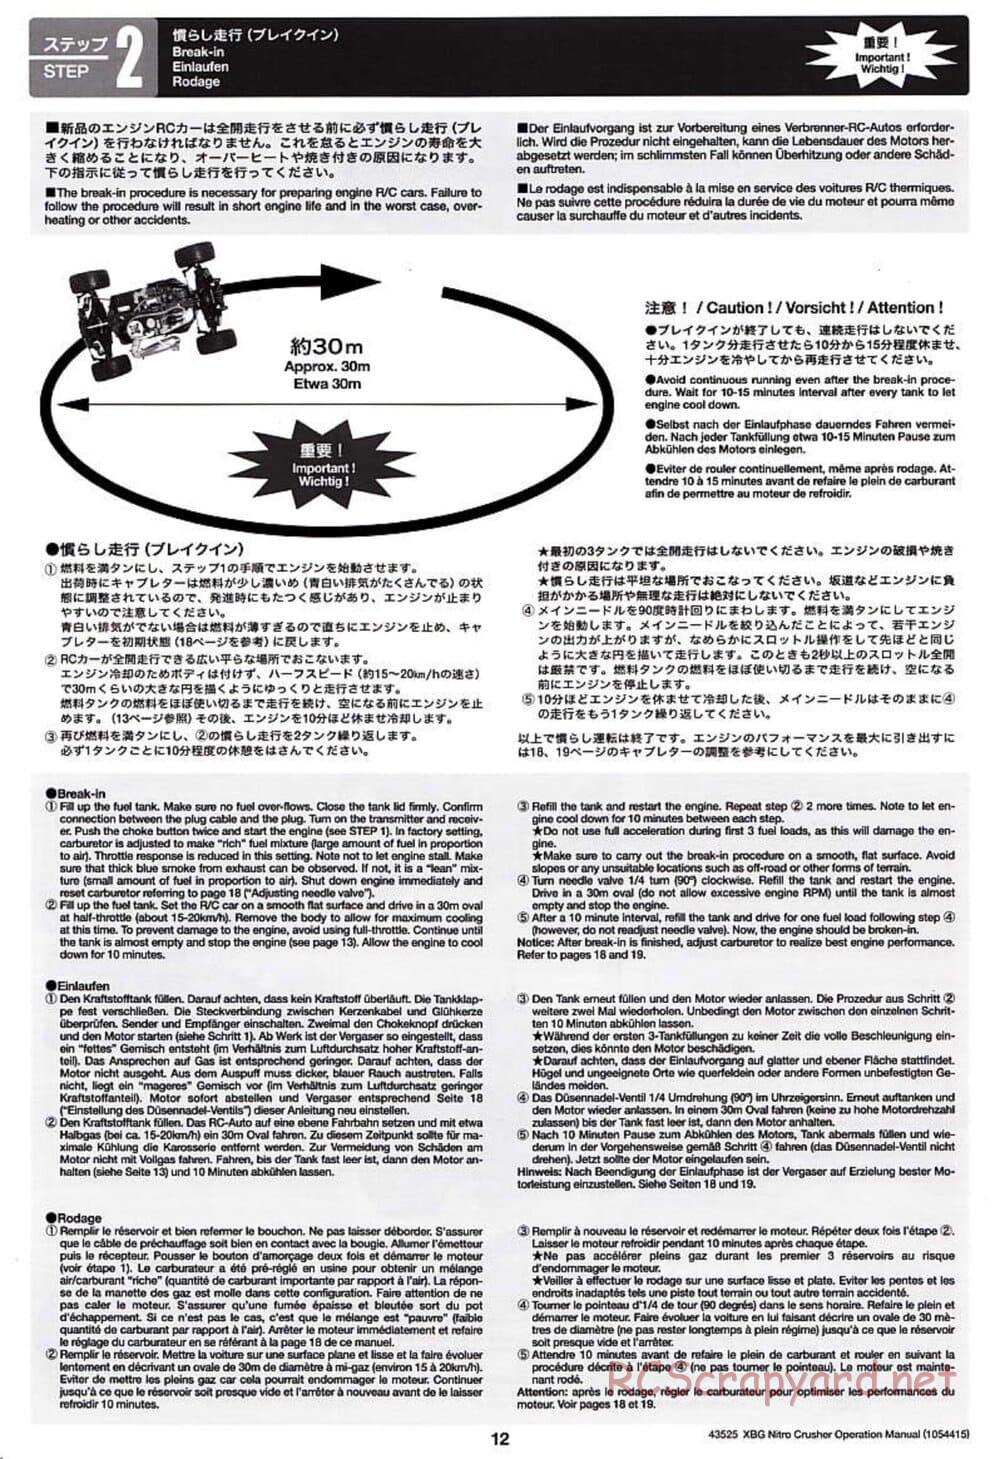 Tamiya - Nitro Crusher - NDF-01T - Operating Manual - Page 12